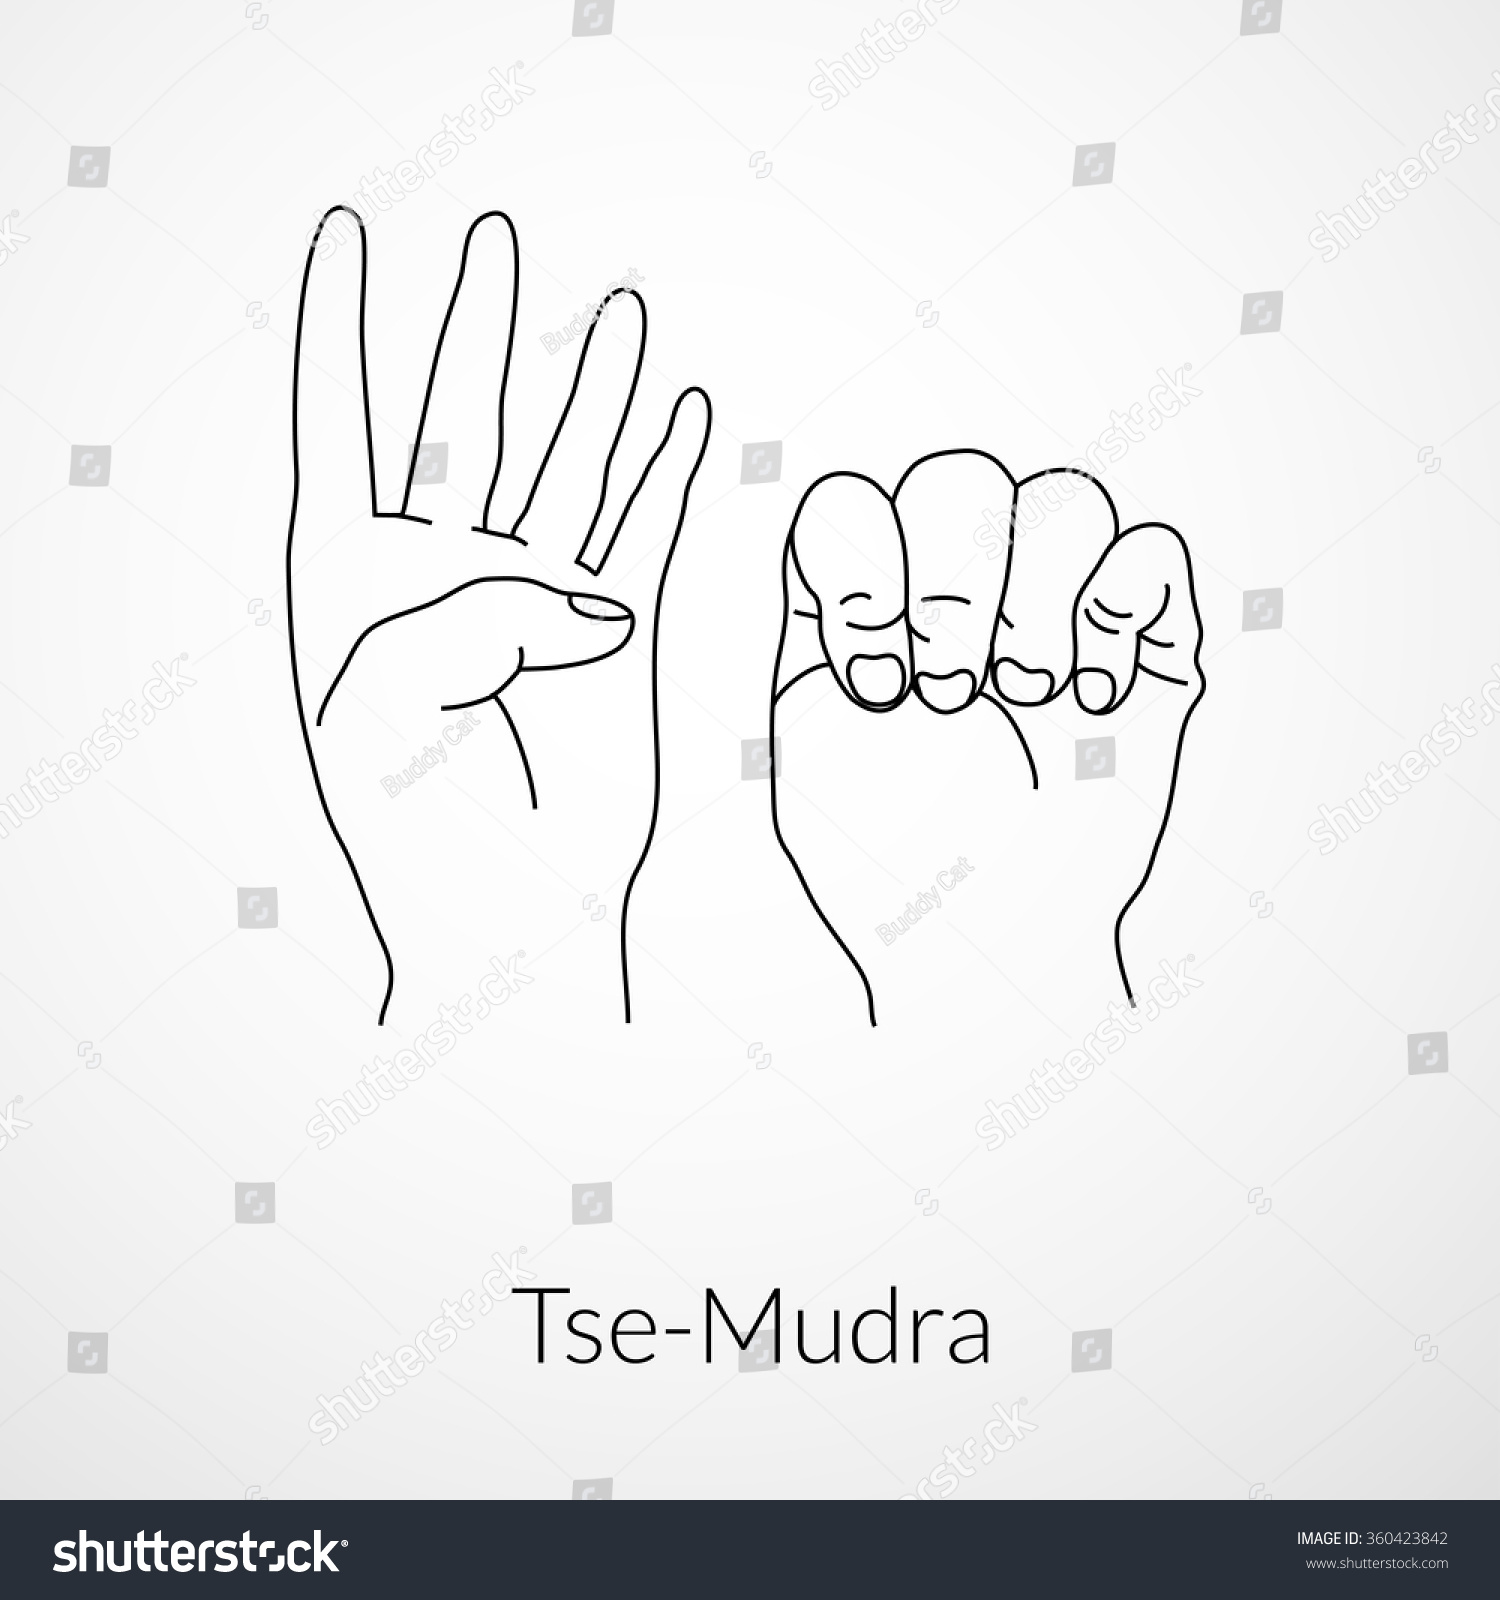 Hand Yoga Mudra Tsemudra Vector Illustration Stock Vector (Royalty Free ...